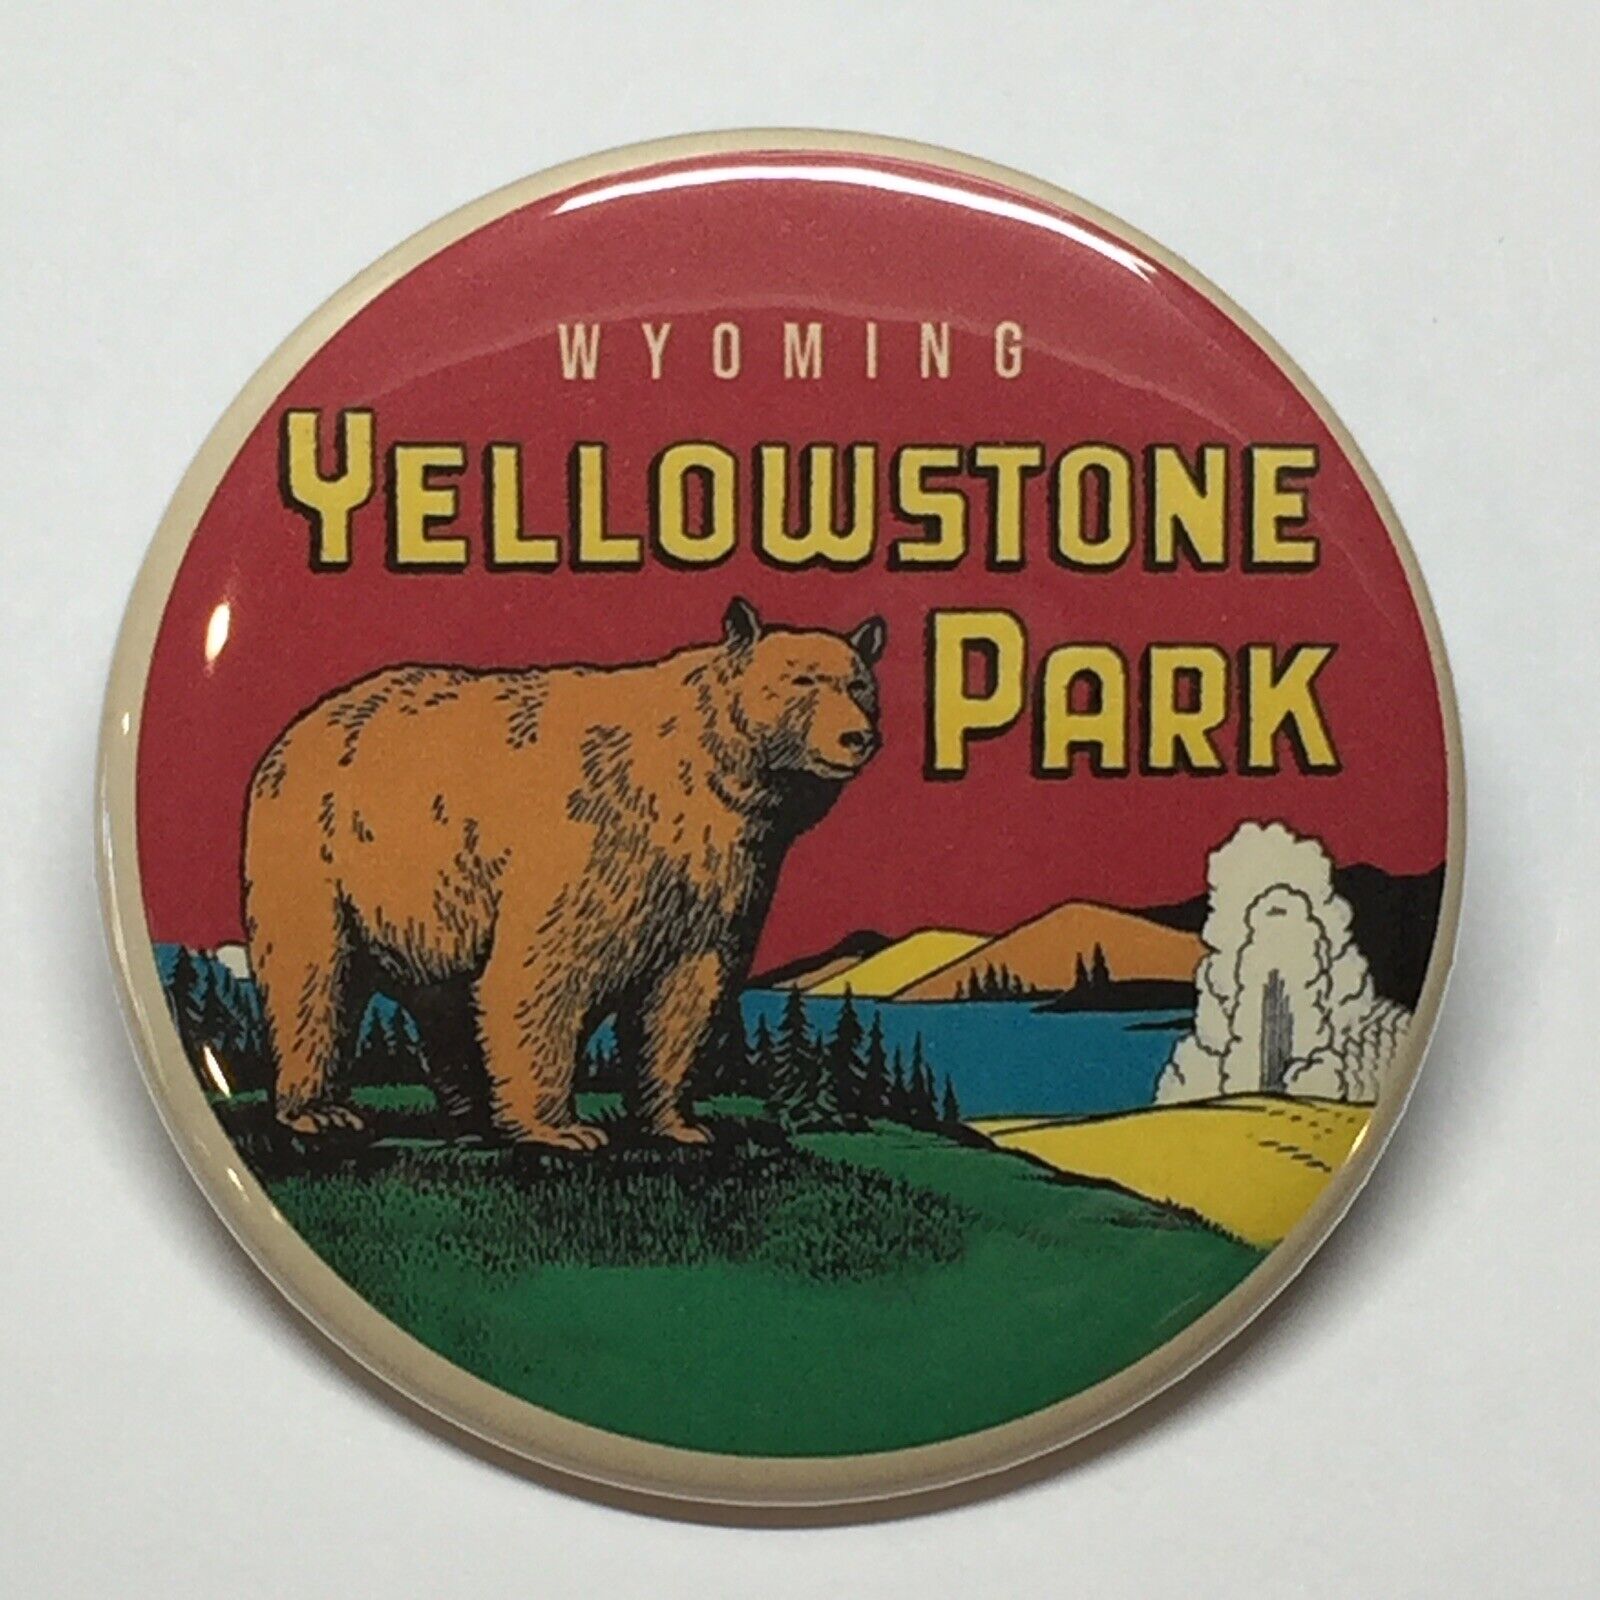 Yellowstone Park Wyoming Fridge Magnet BUY 3 GET 4 FREE MIX & MATCH